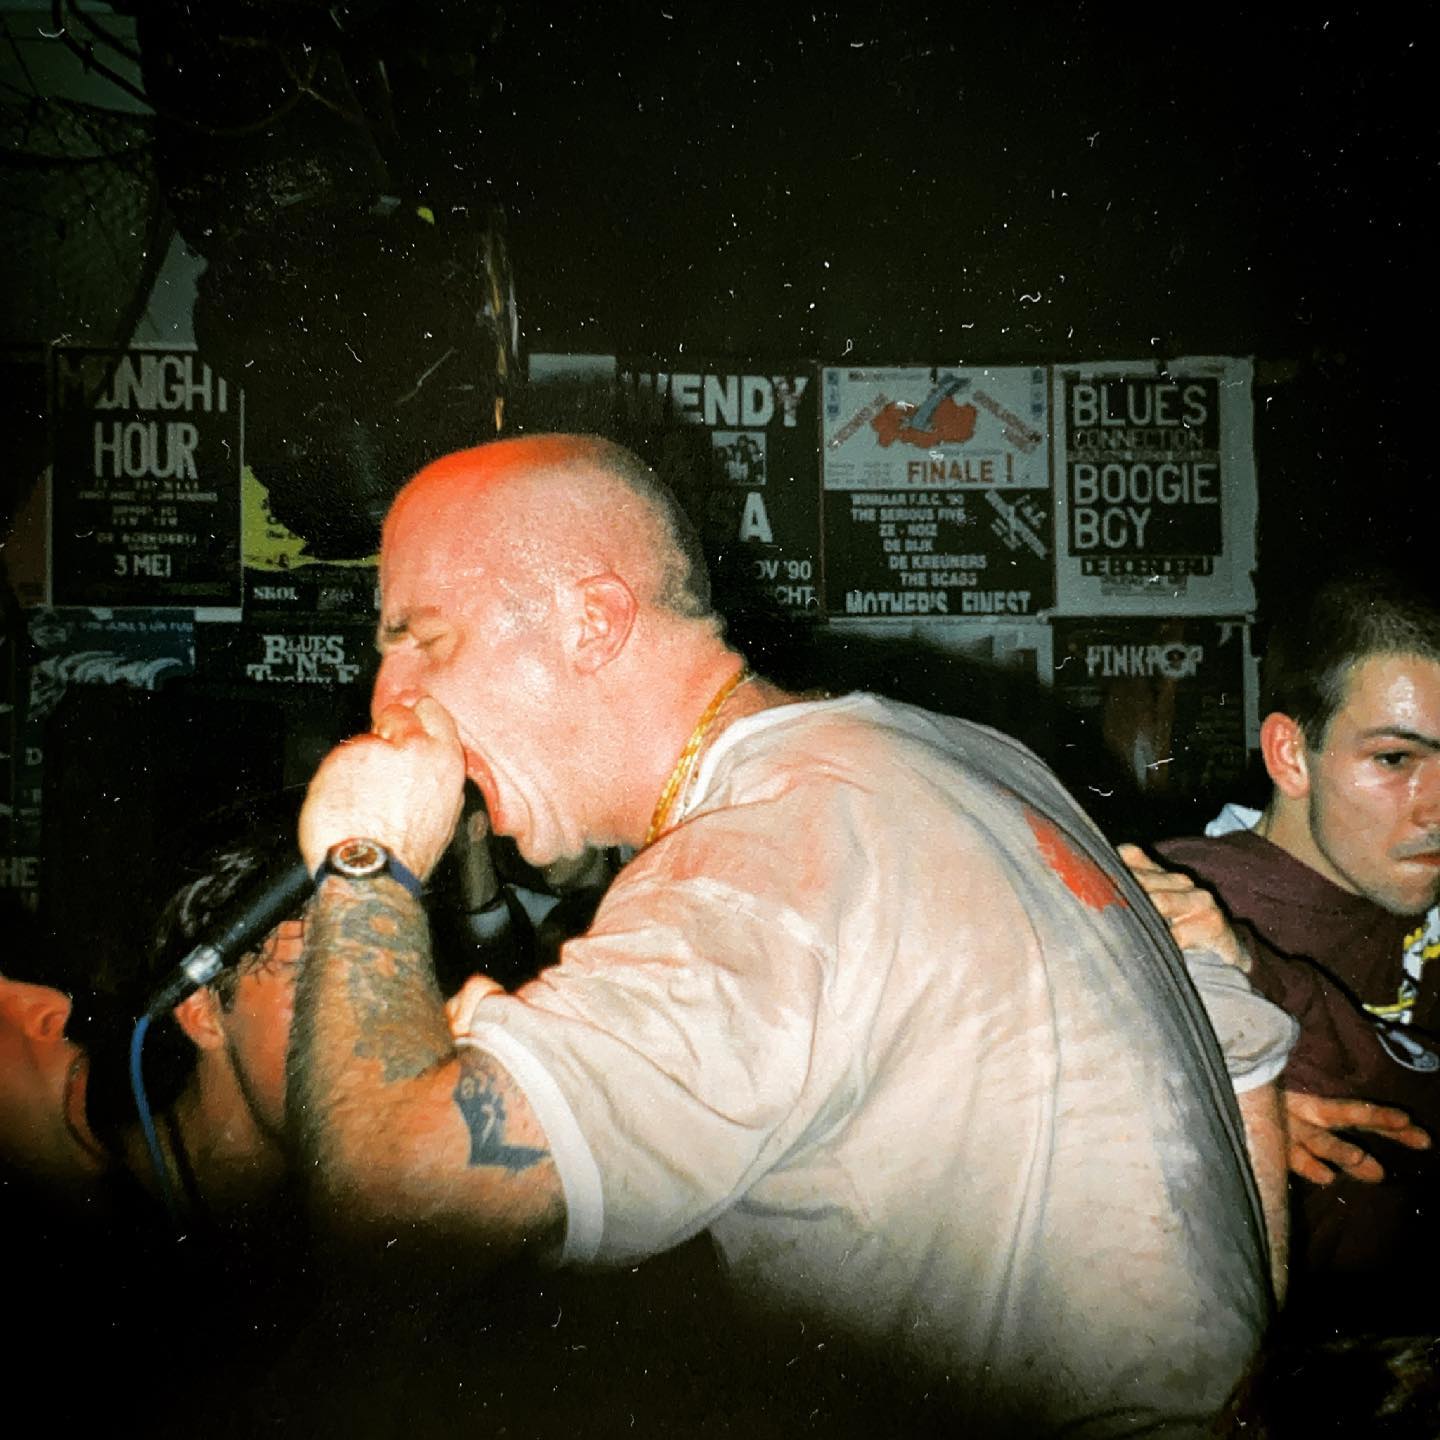 Veil - Hardcore fest Geleen - 8/9 March 1997 #straightedge #hardcore #punkrock #harekrishna @xthreesomex @lookingback_ography #gigpic by @twentylandcrew